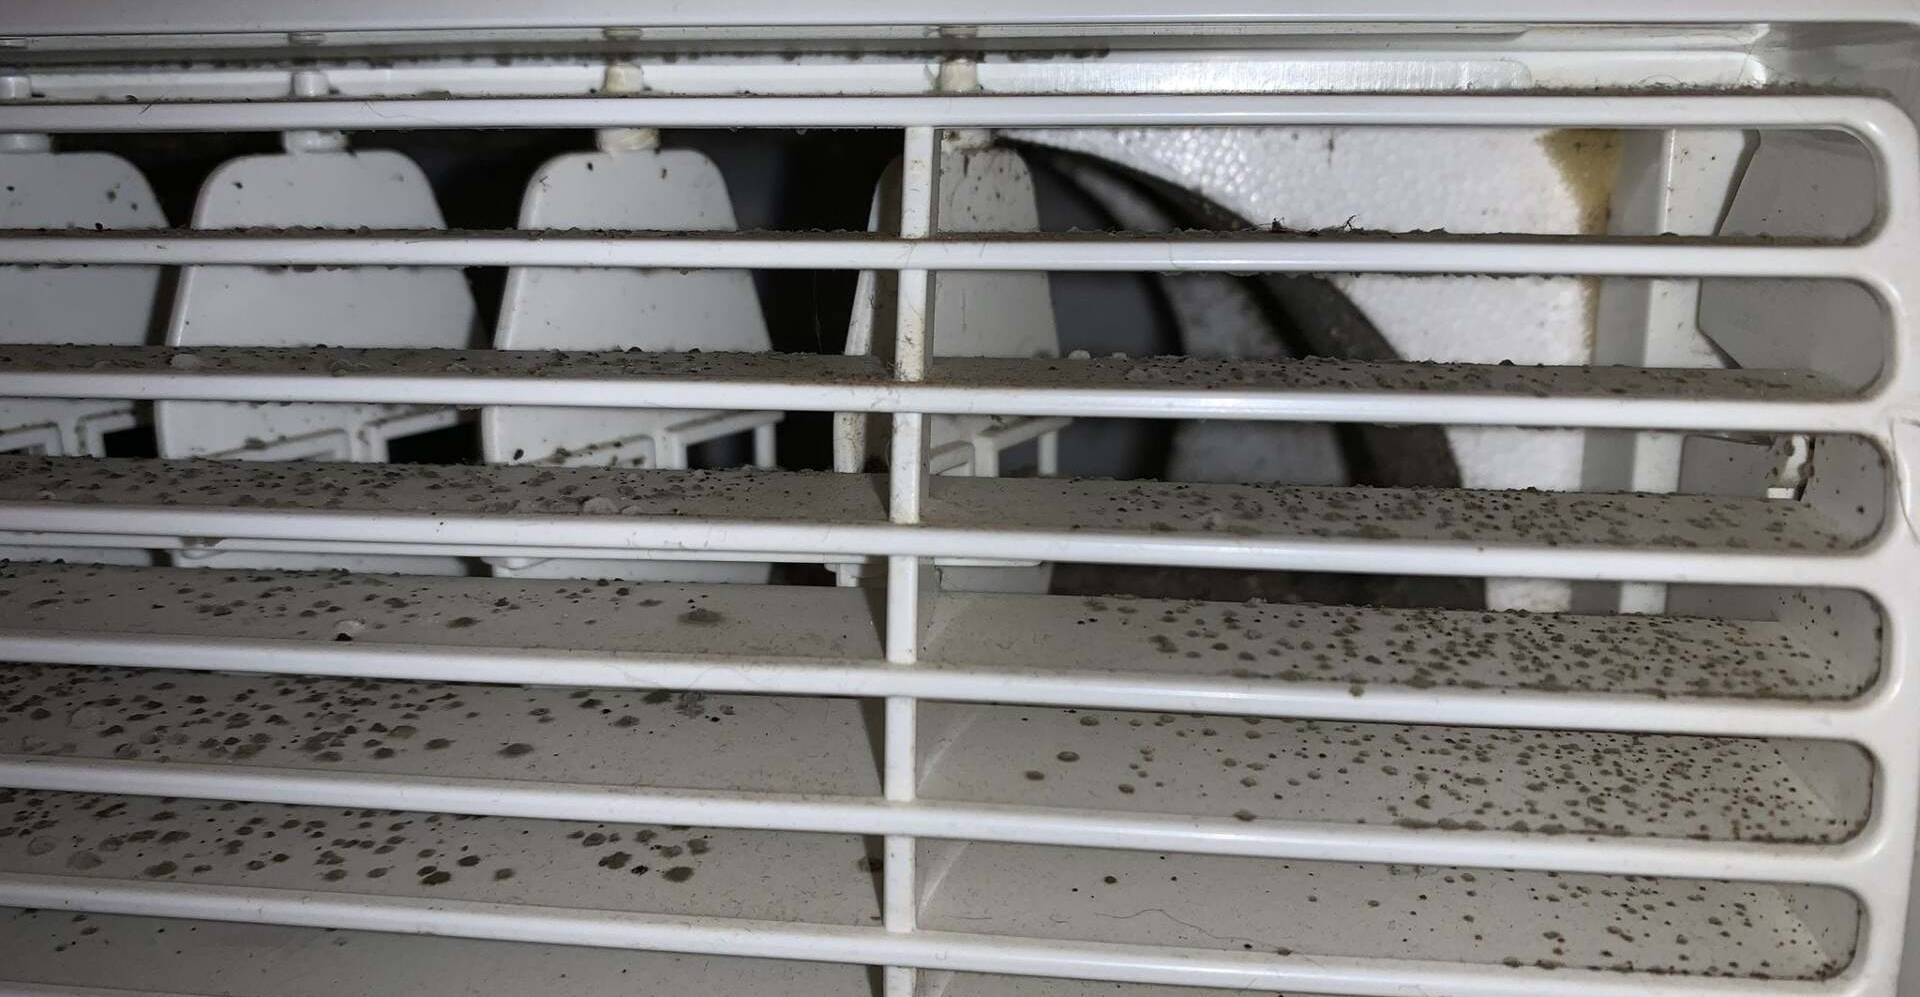 Mold in HVAC system in Louisiana